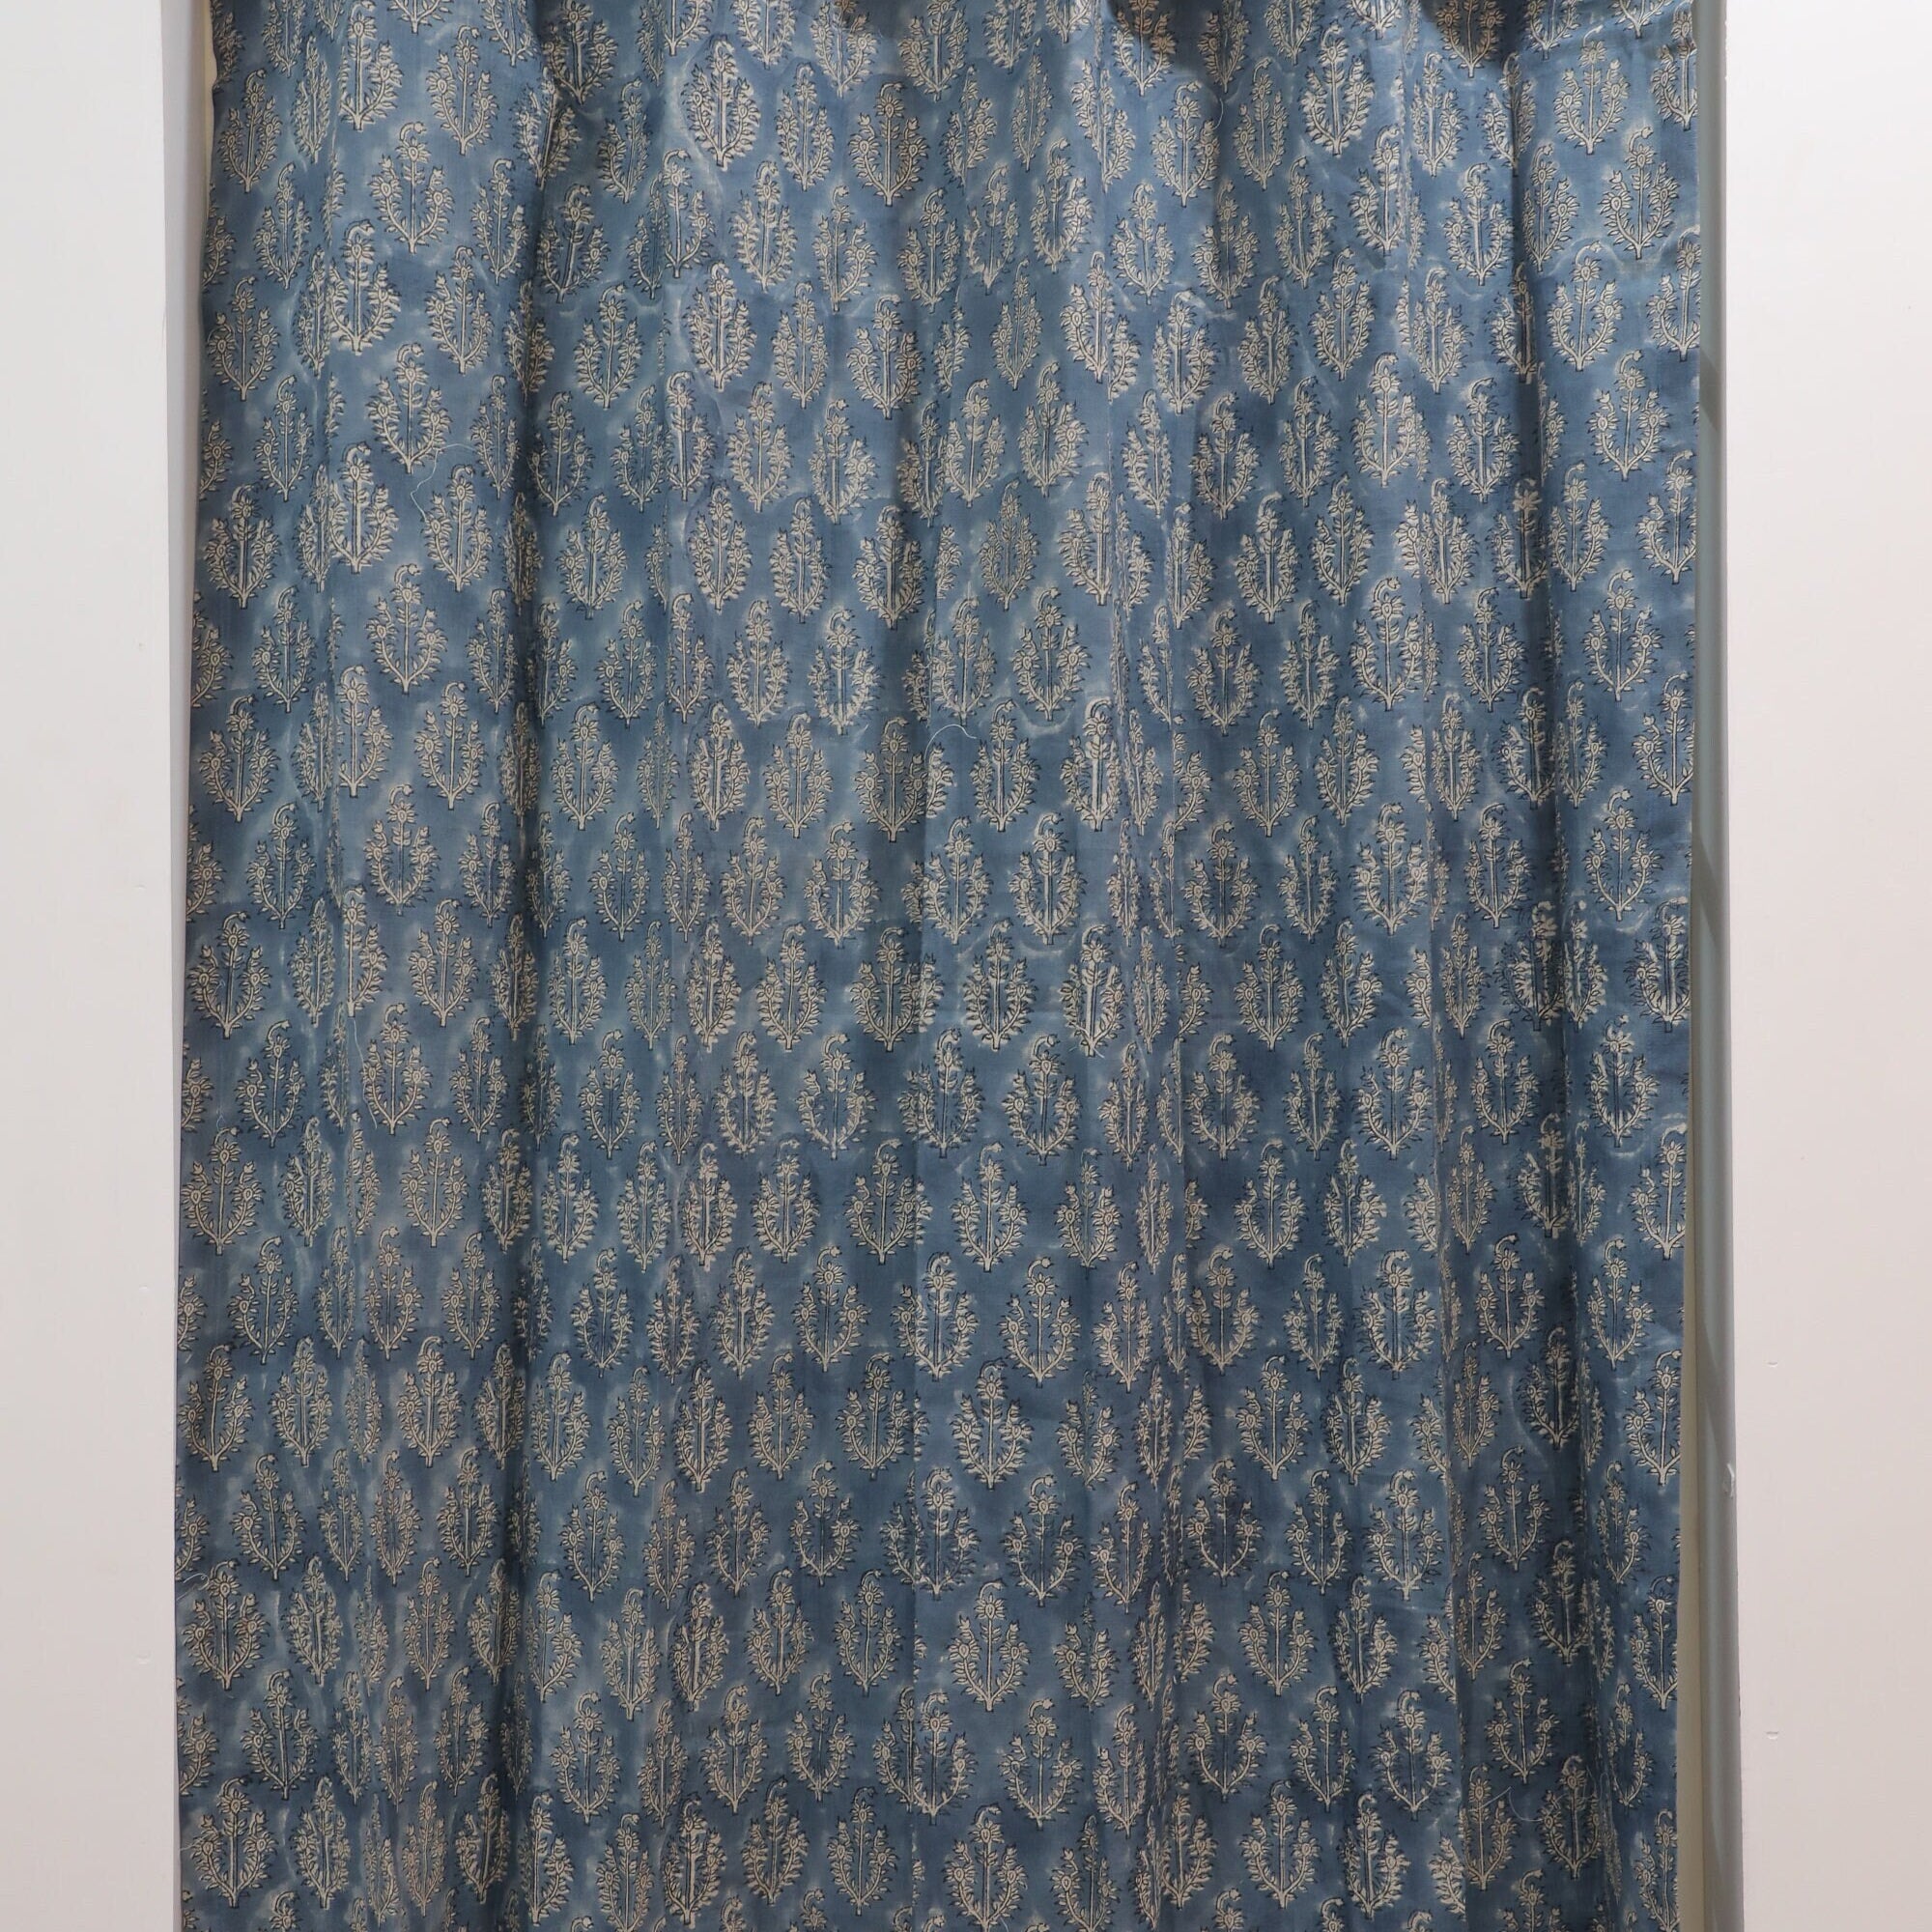 Hand Block Print Curtains, Room decor, Linen Curtains, Blackout window valance, Indian Printed Fabric - NEEL GAGAN